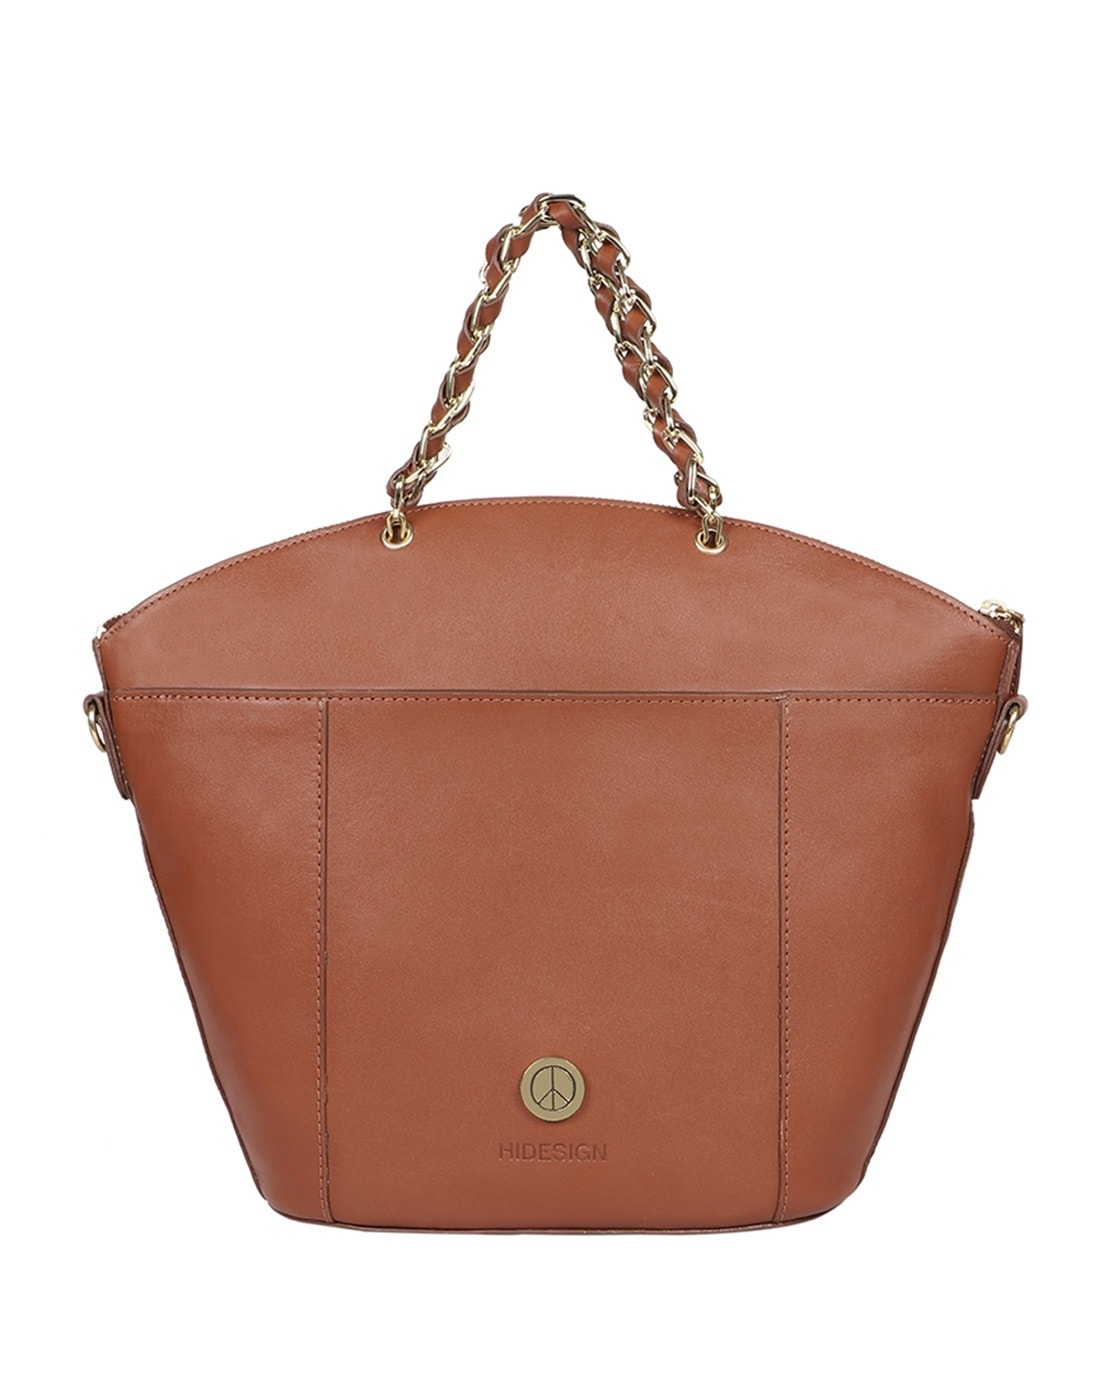 Hidesign Bag On Amazon best brand women leather handbag Rakshabandhan Gift  for Sister | Rakshabandhan Gift: बेस्ट लैदर पर्स खरीदें 70% डिस्काउंट पर,  अमेजन पर आया ऑफर